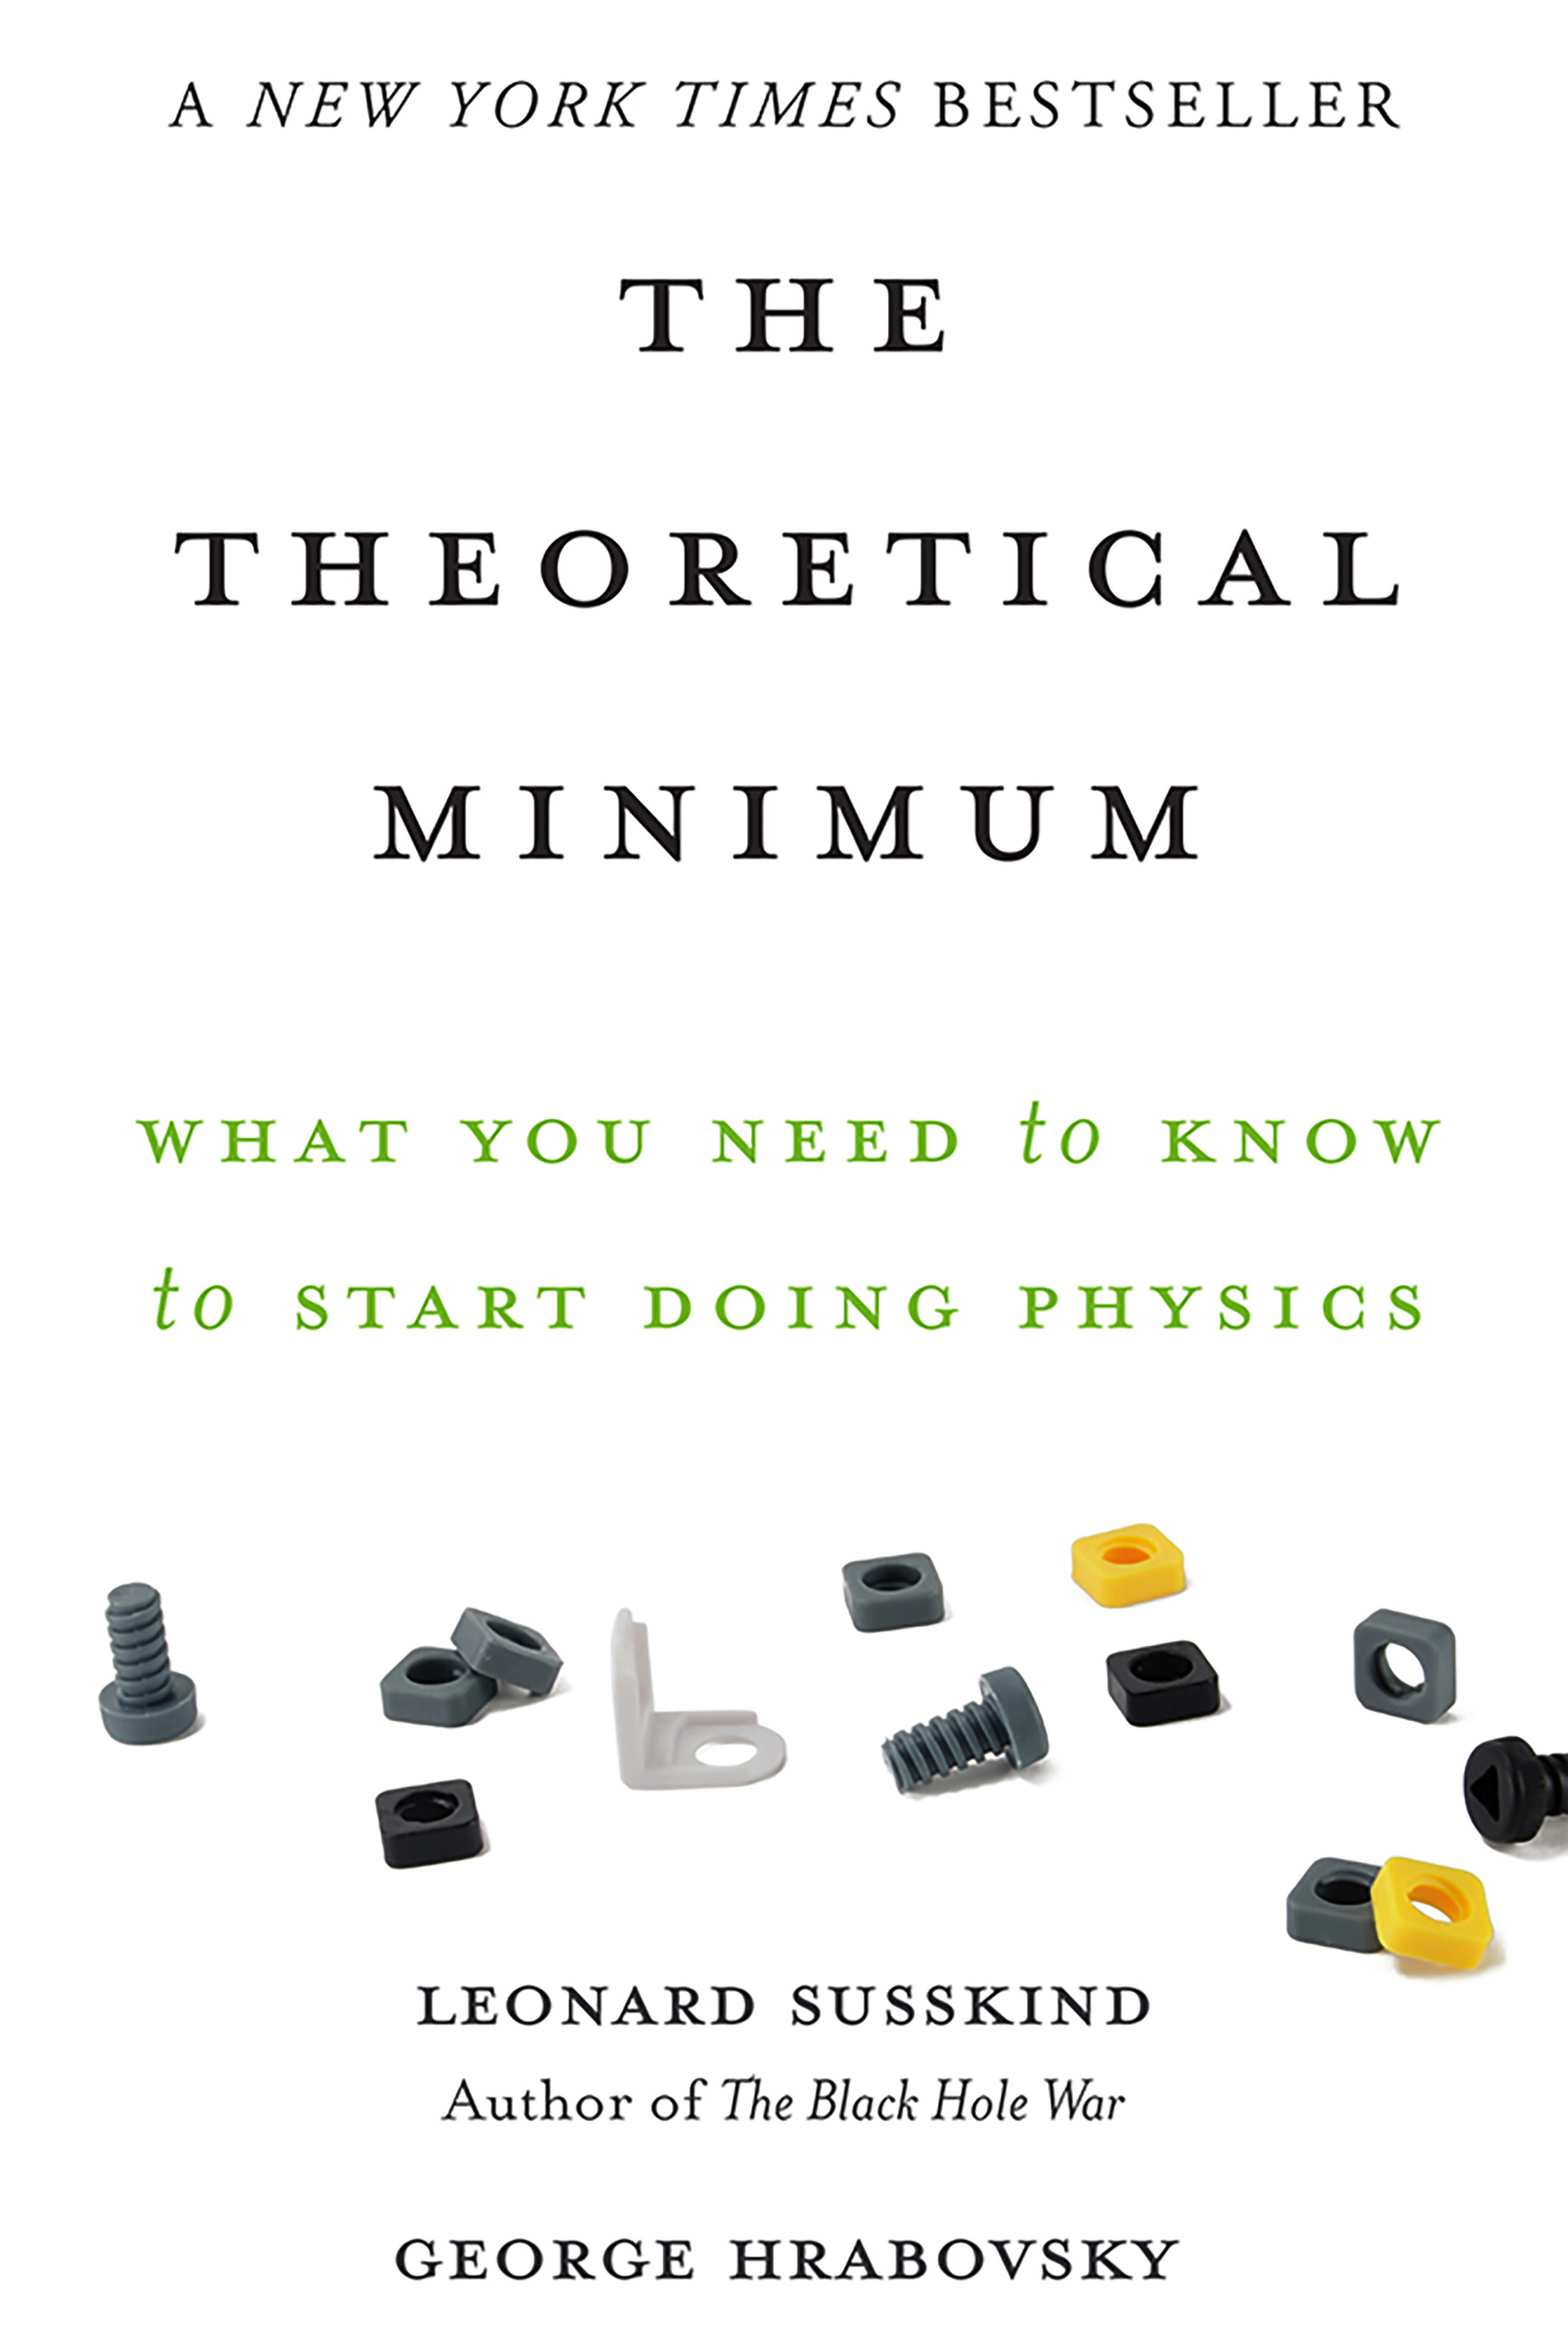 The Theoretical Minimum by Leonard